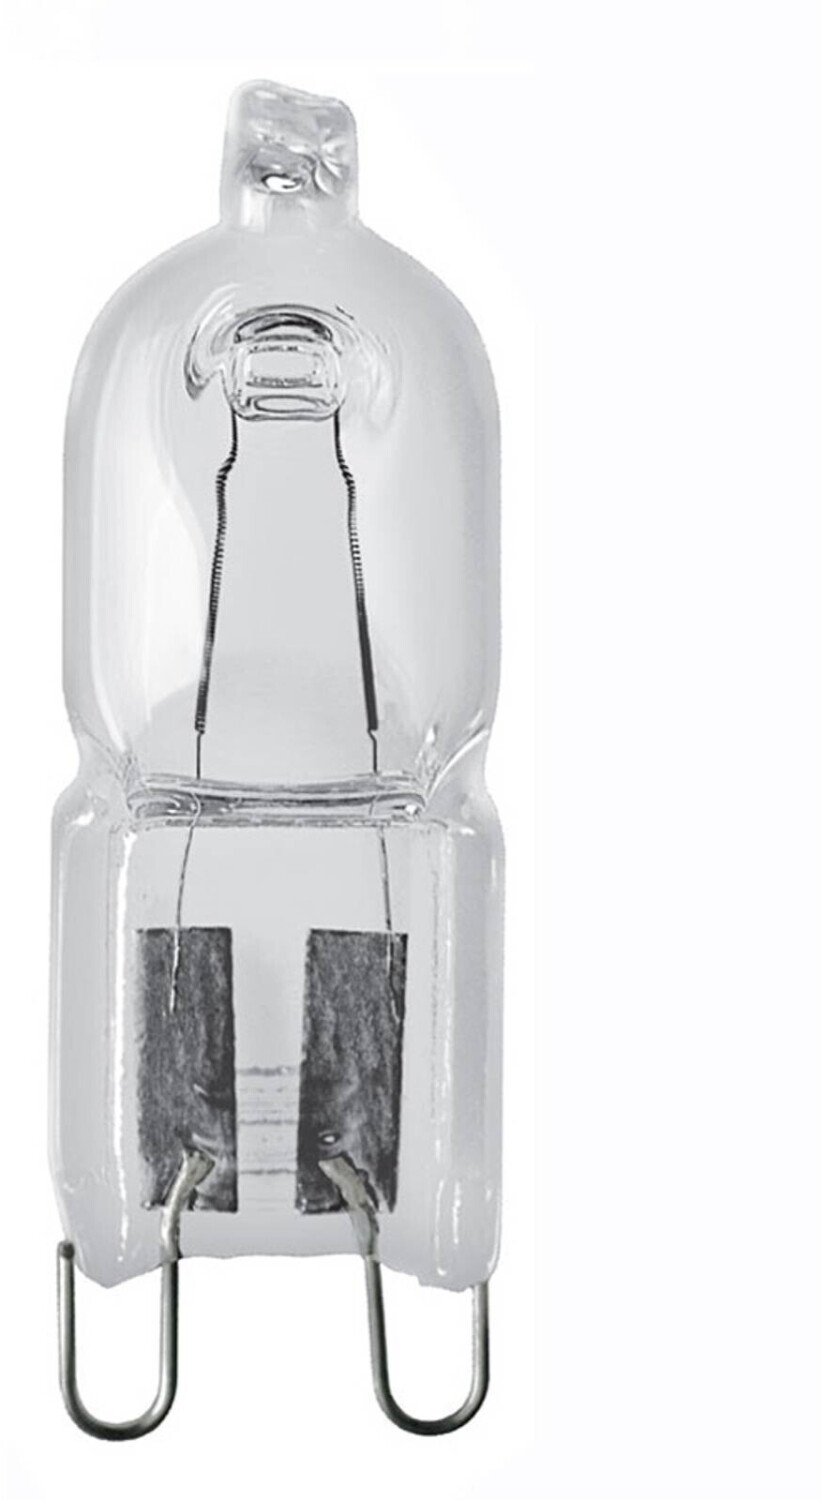 Osram Halopin ampoule halogène capsule G9 20W